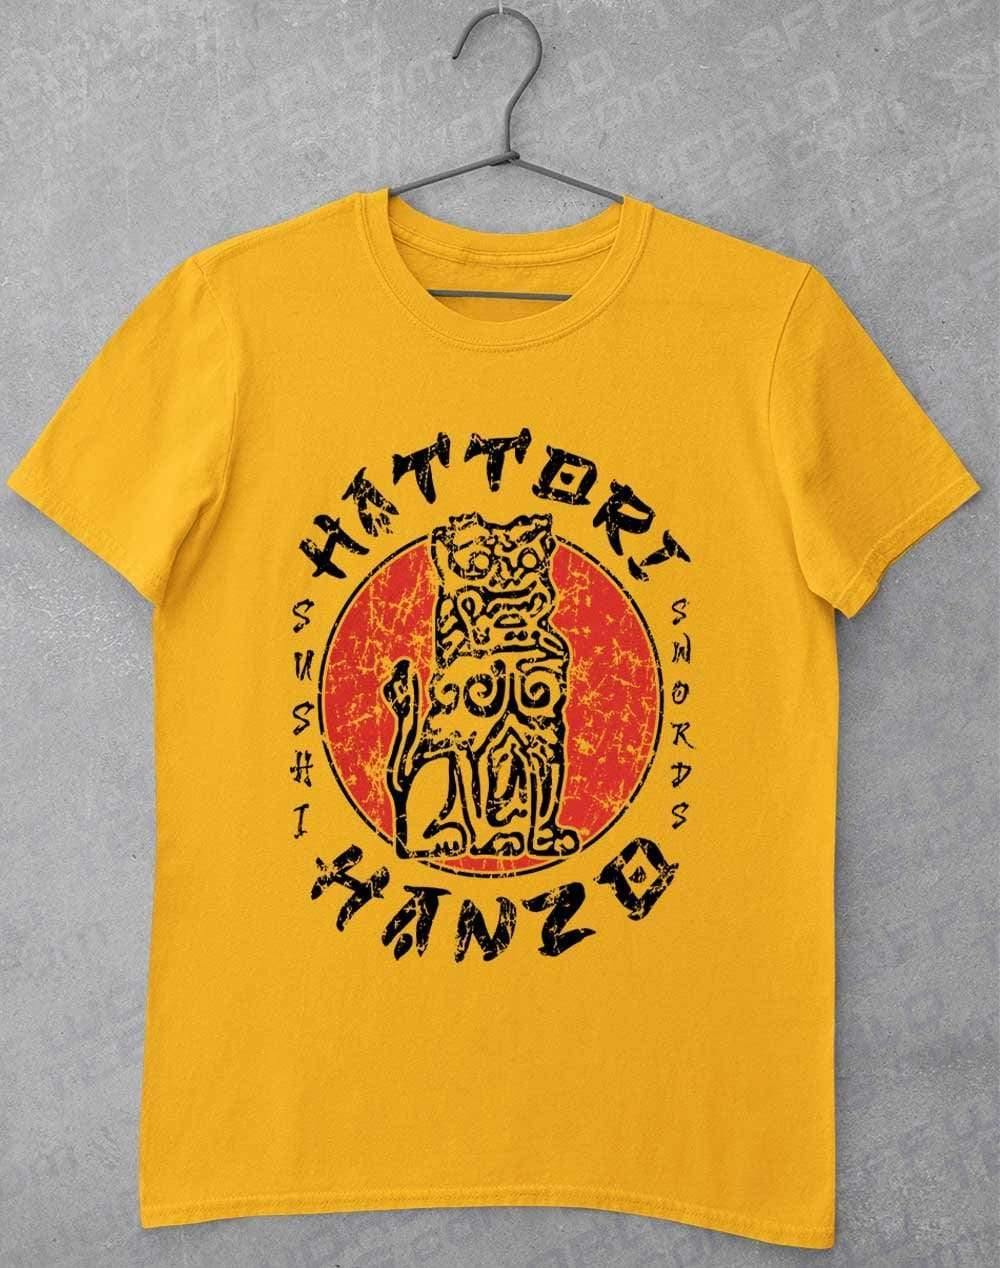 Hattori Hanzo T-Shirt S / Gold  - Off World Tees